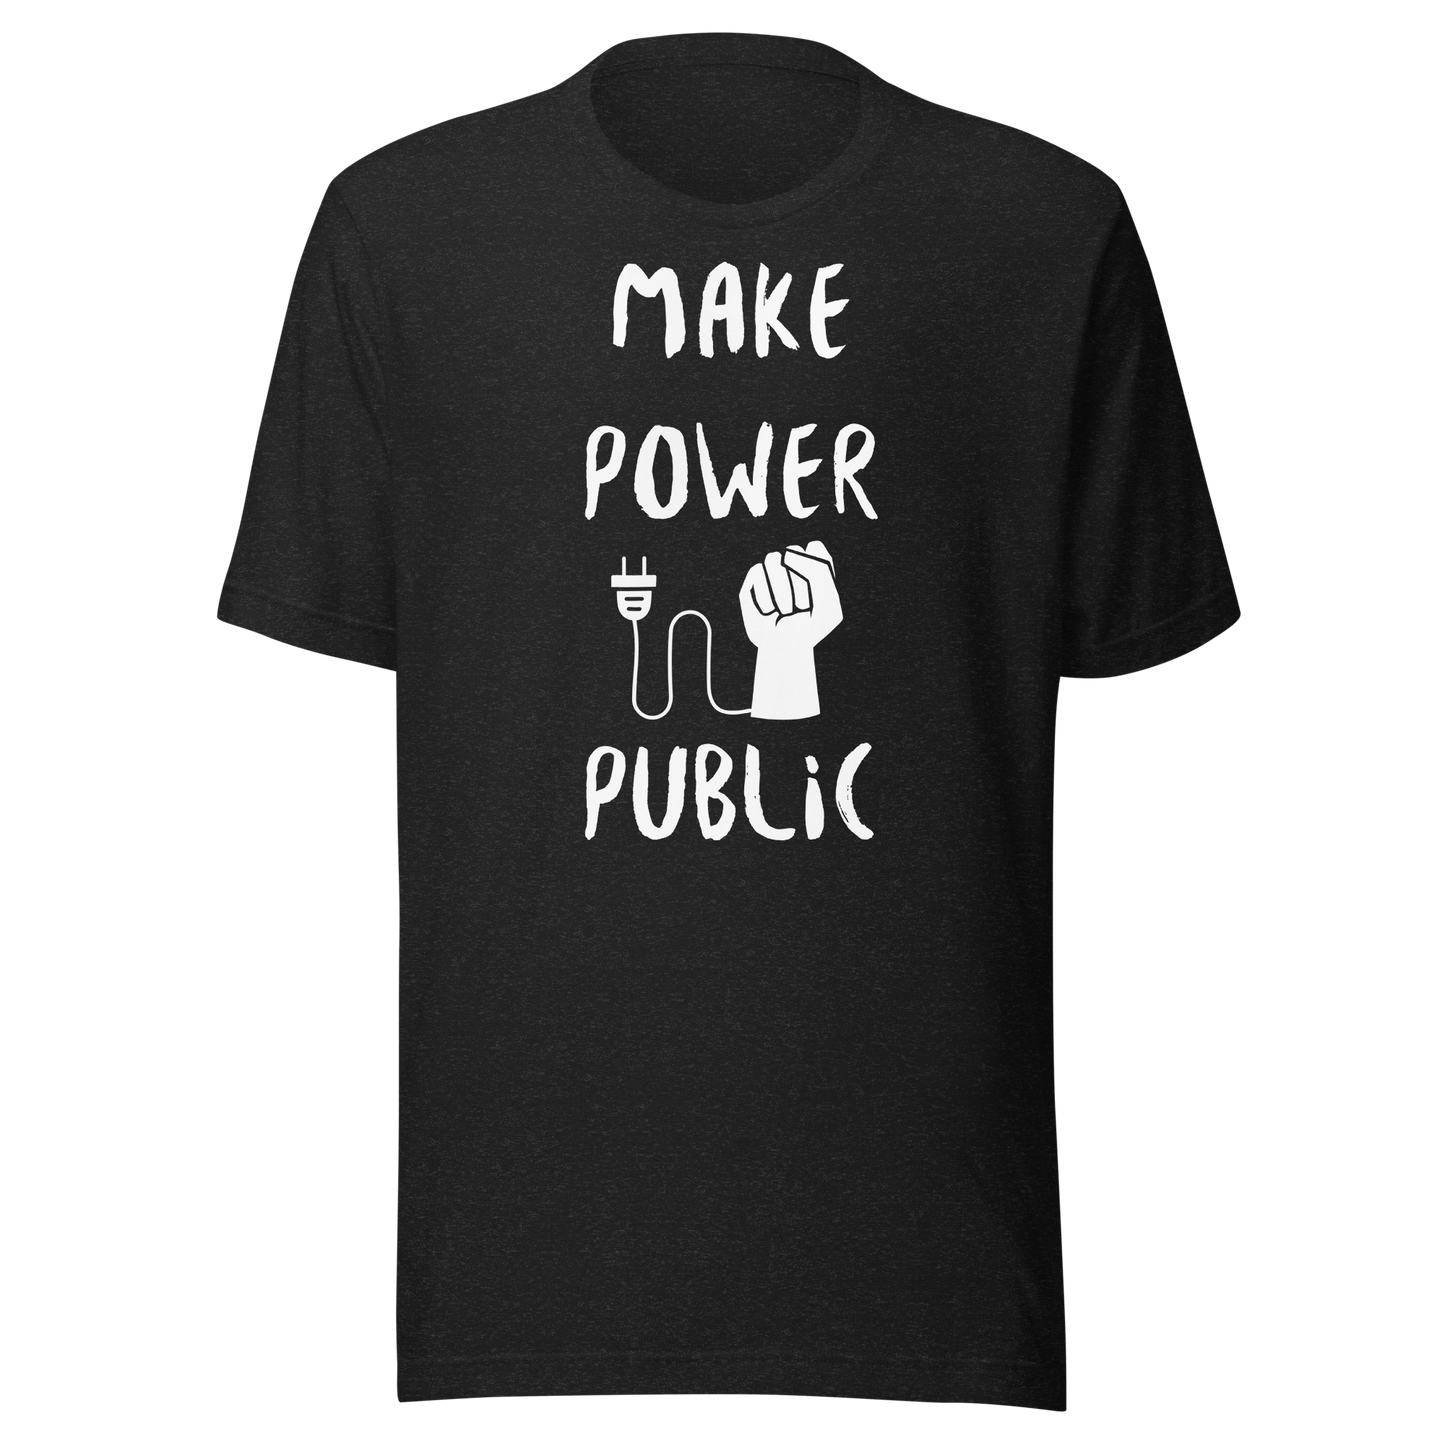 Unisex Short-Sleeve Top: Public Power